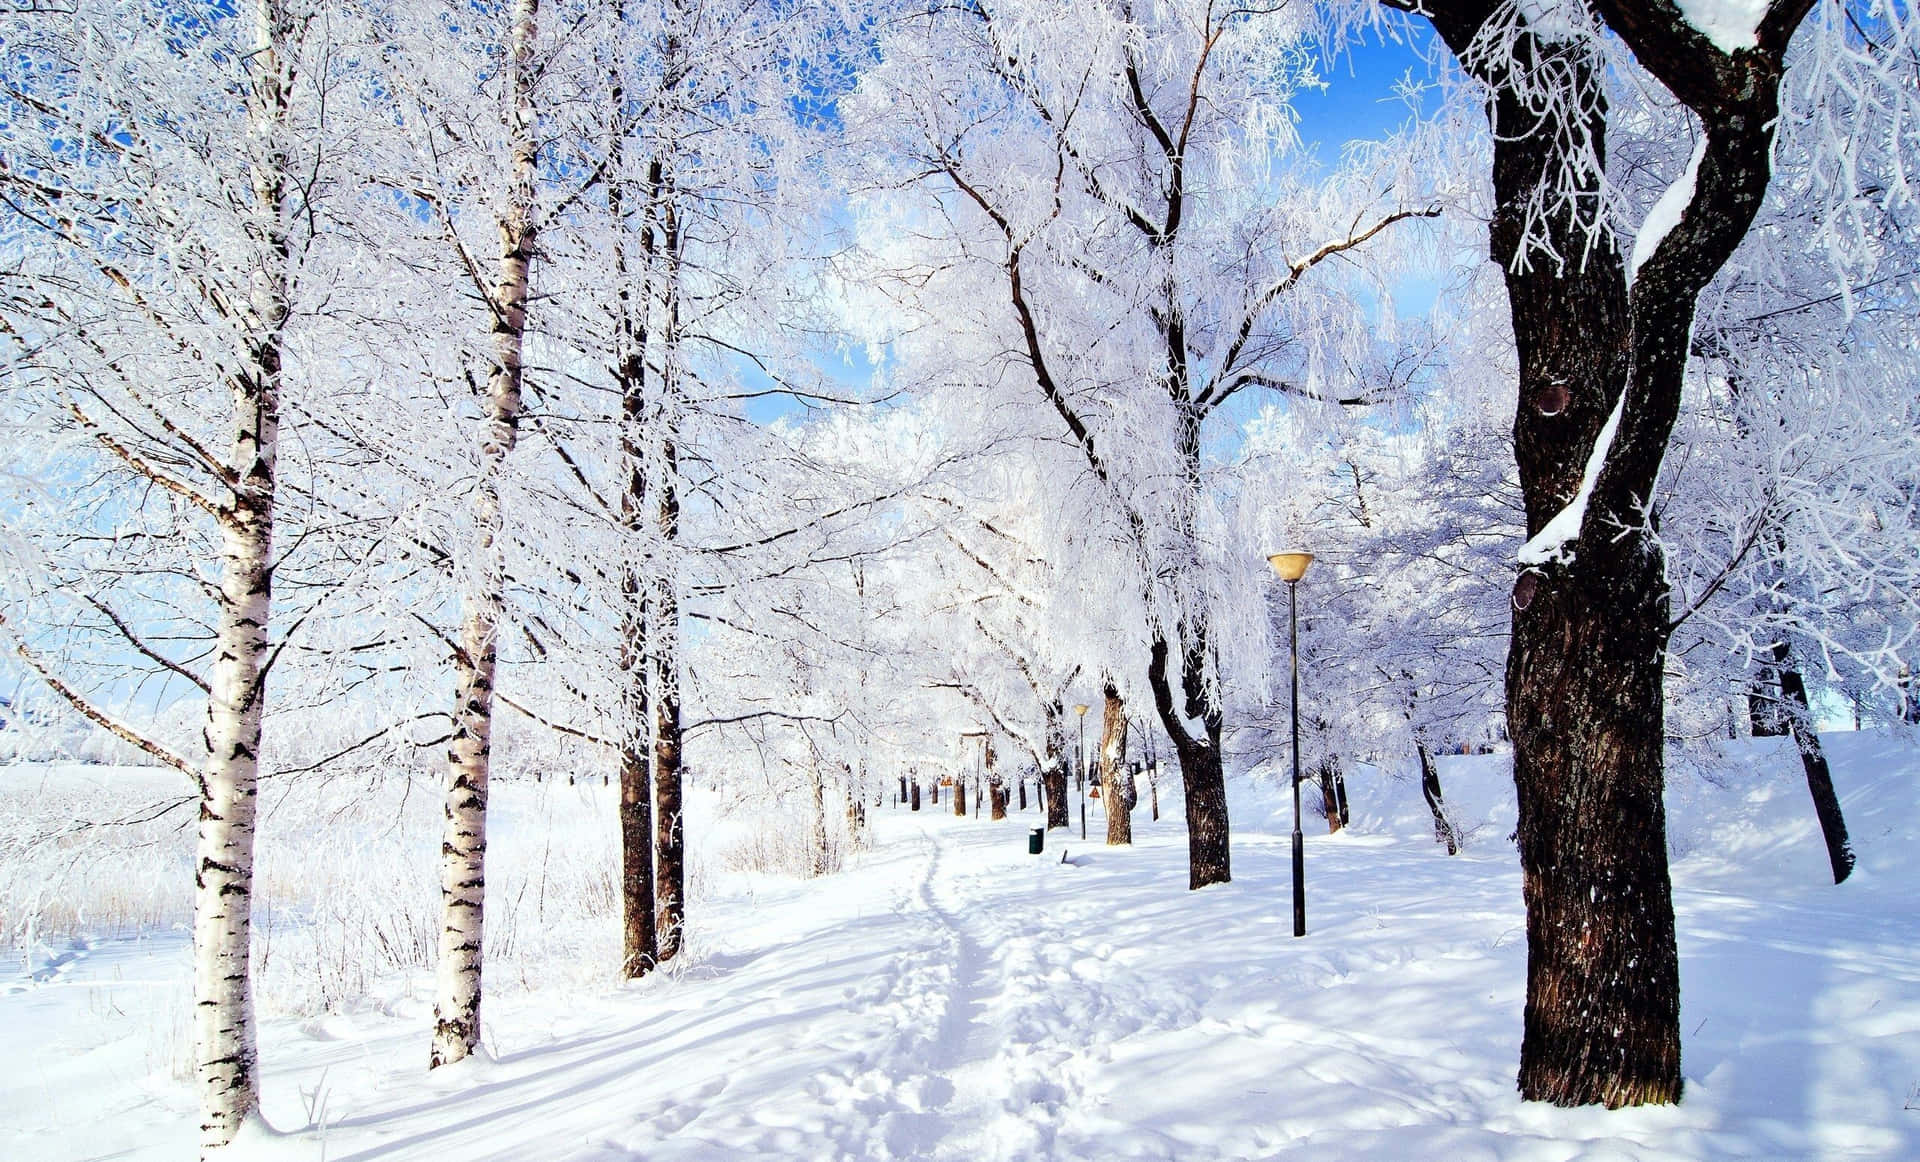 Magical Winter Wonderland